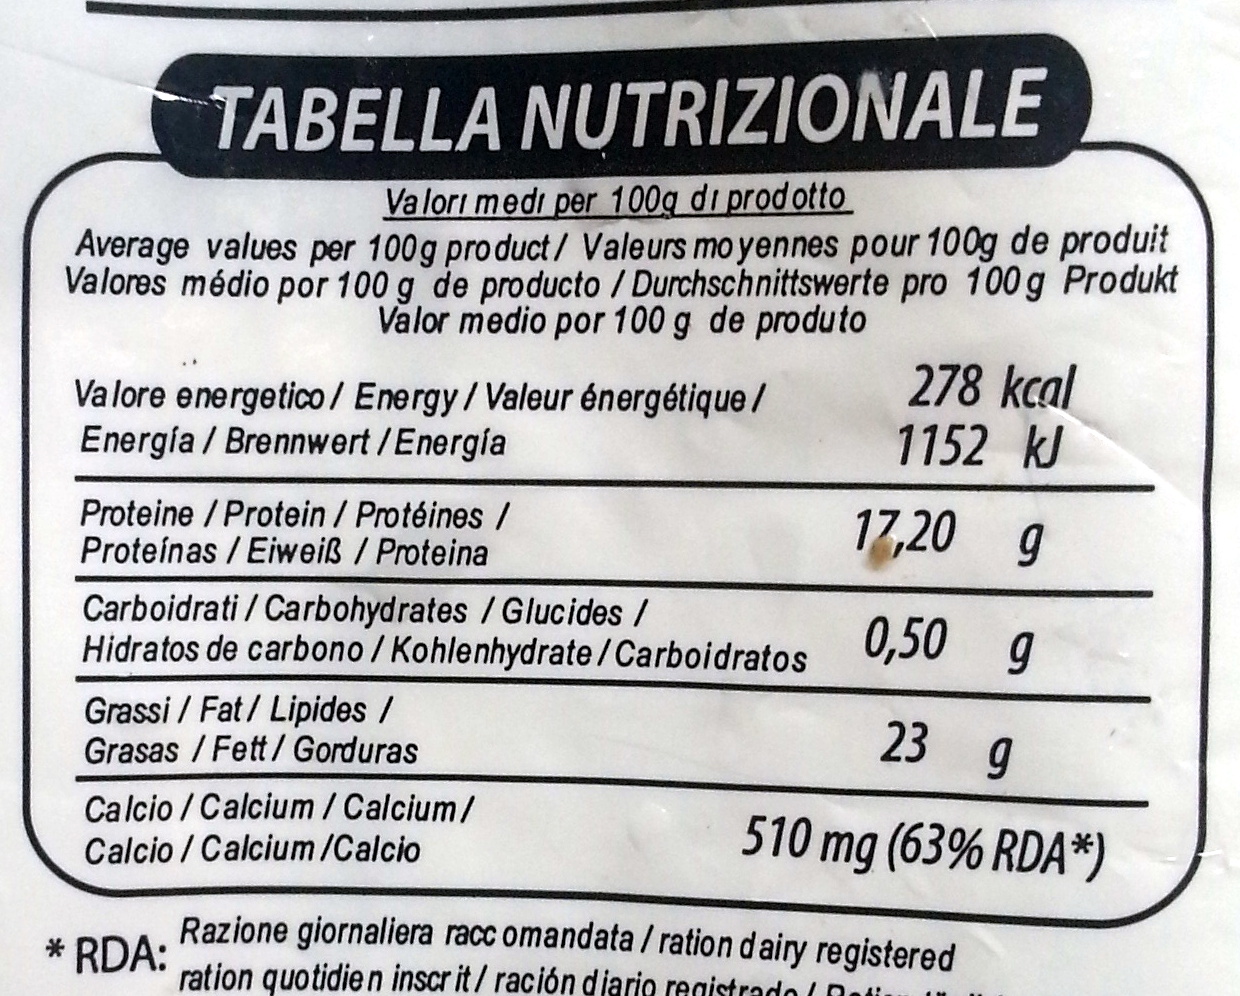 Mozzarella di Bufala Campana AOP (23% MG) - 150 g - Bravo bis - Tableau nutritionnel